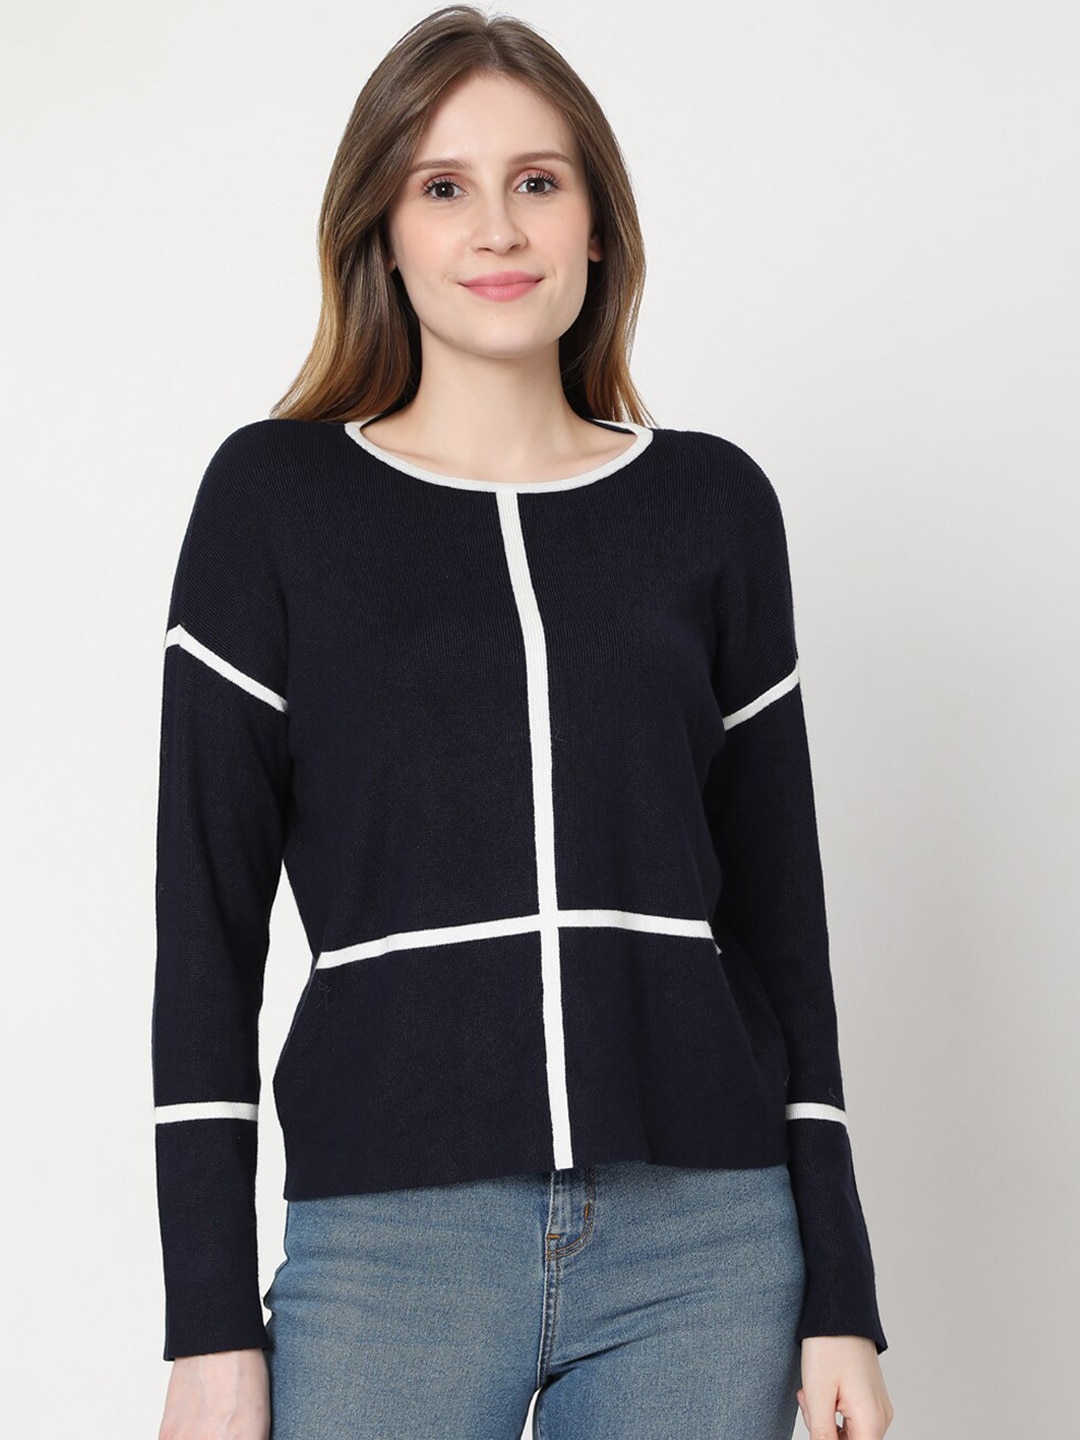 Vero Moda Women Navy Blue Striped Pullover Sweater Price in India